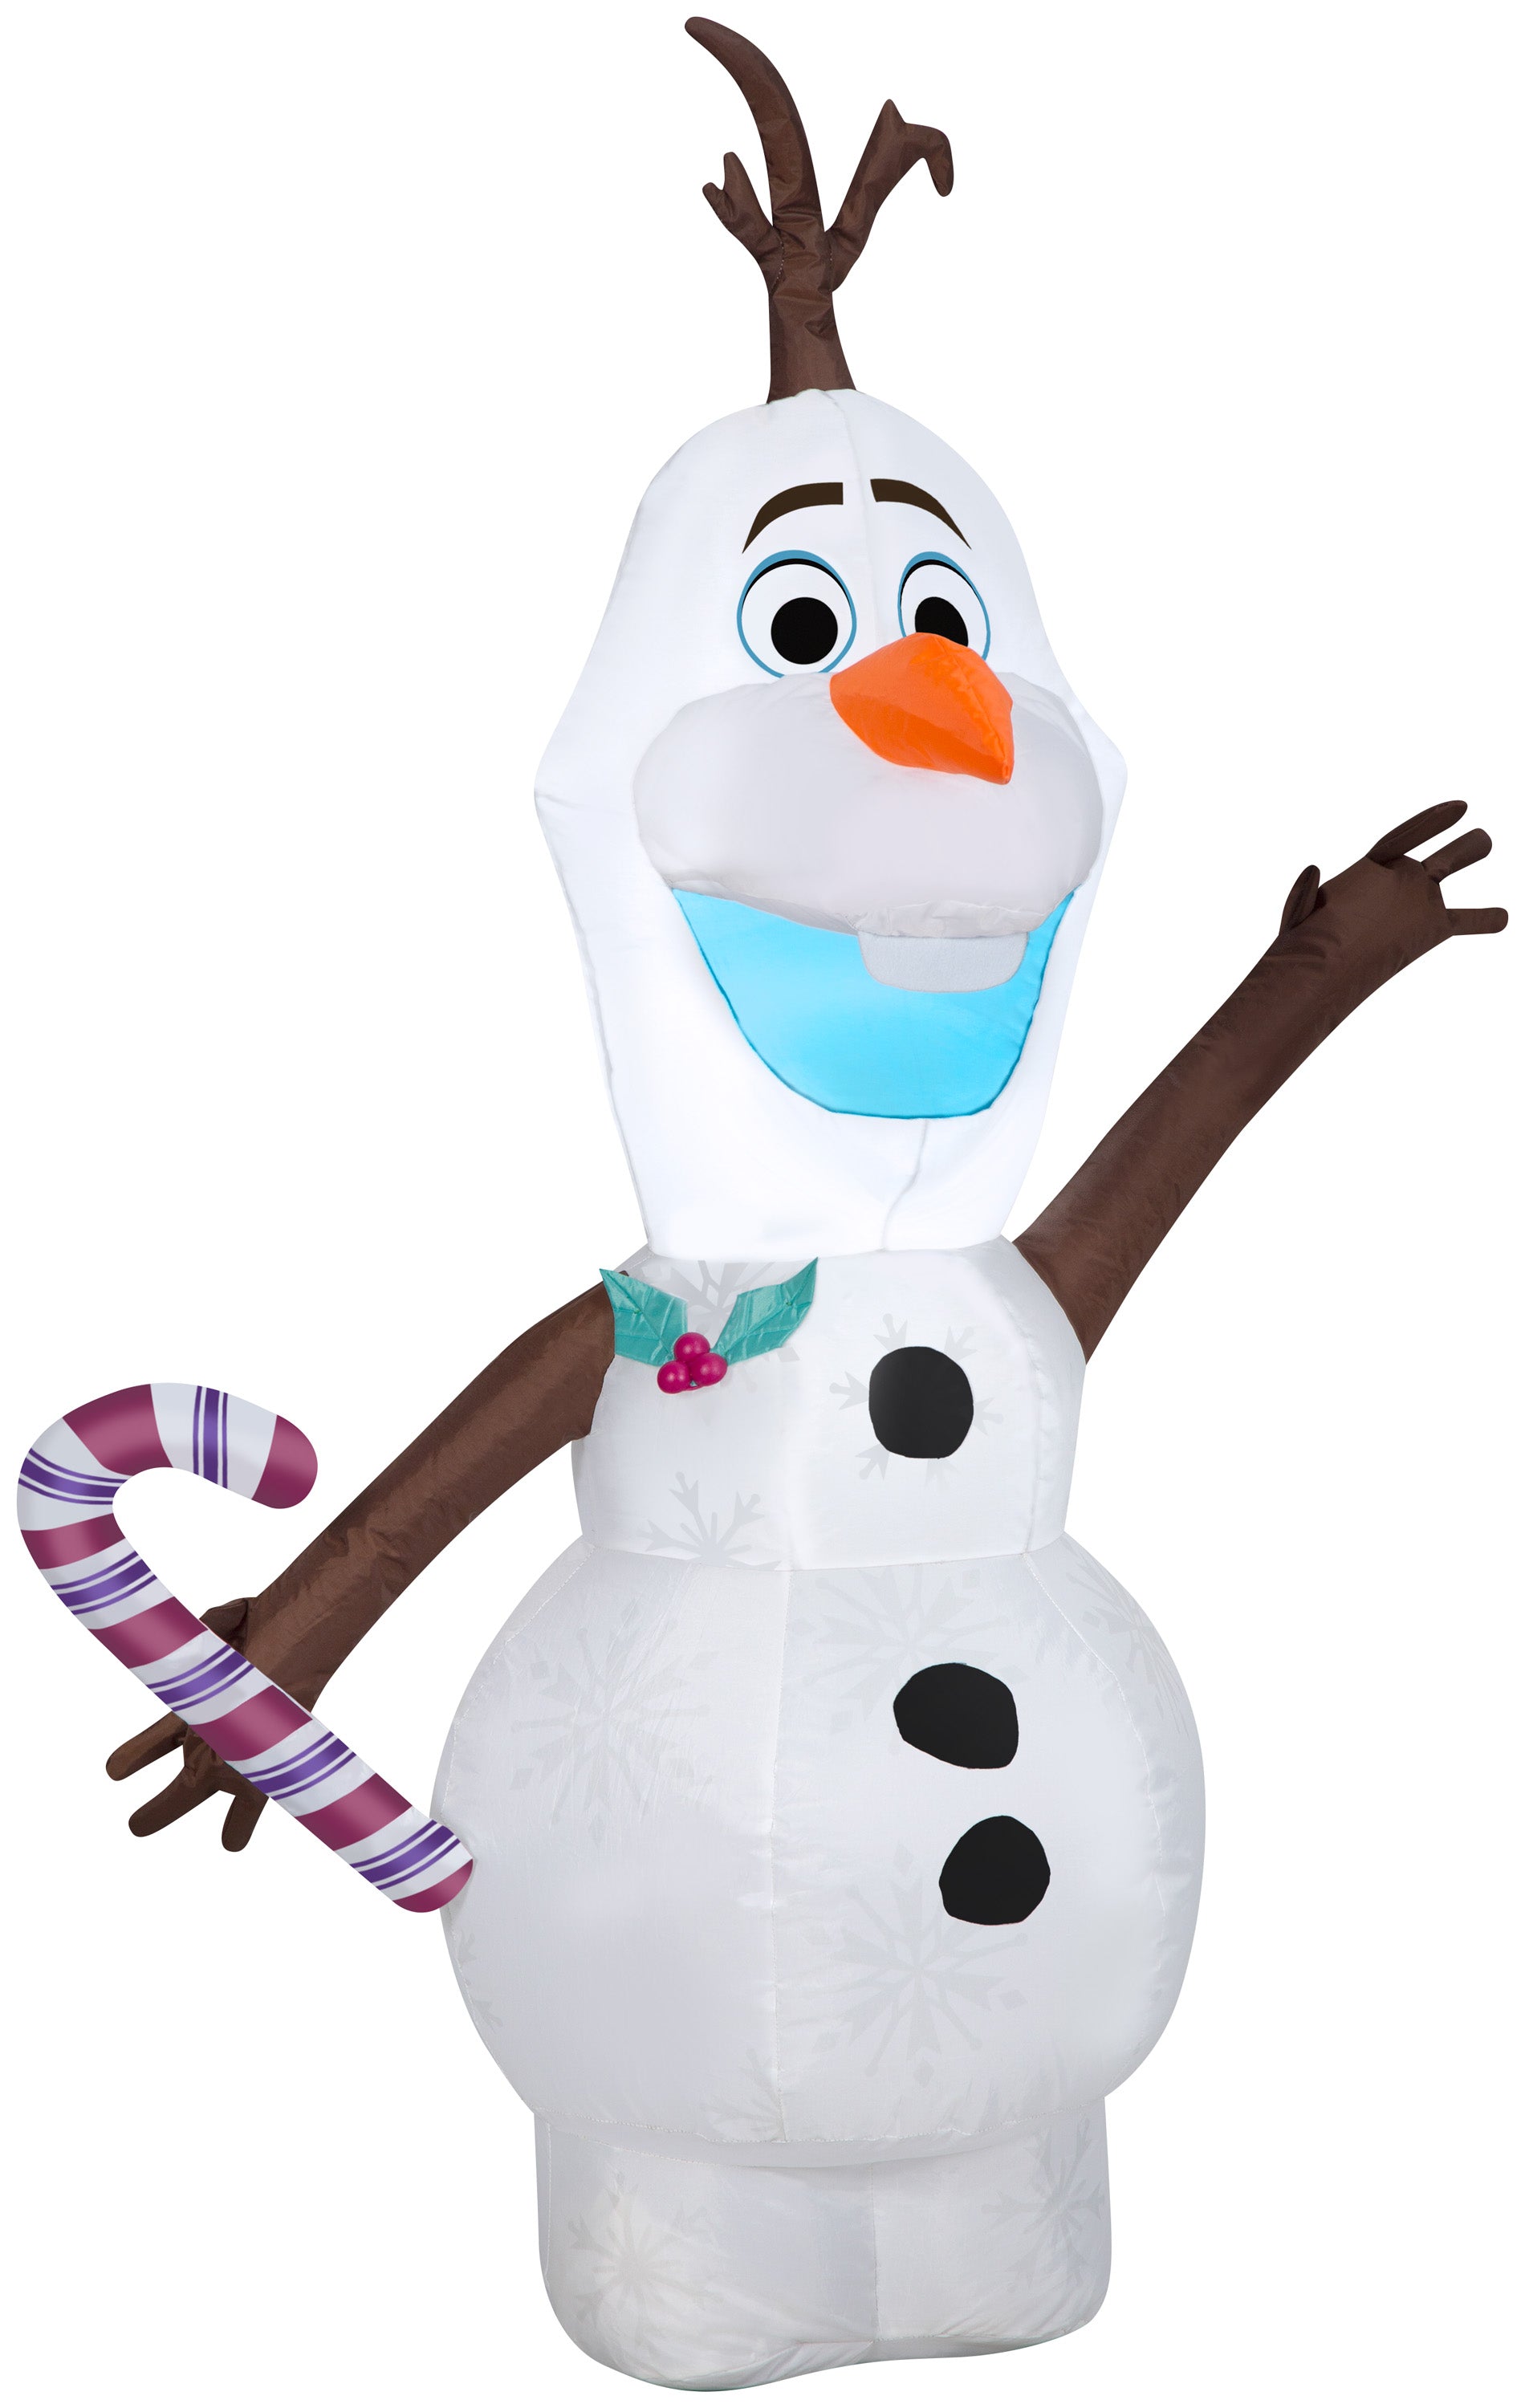 3.5' Disney's Frozen Baby Sven Reindeer by Gemmy Inflatables